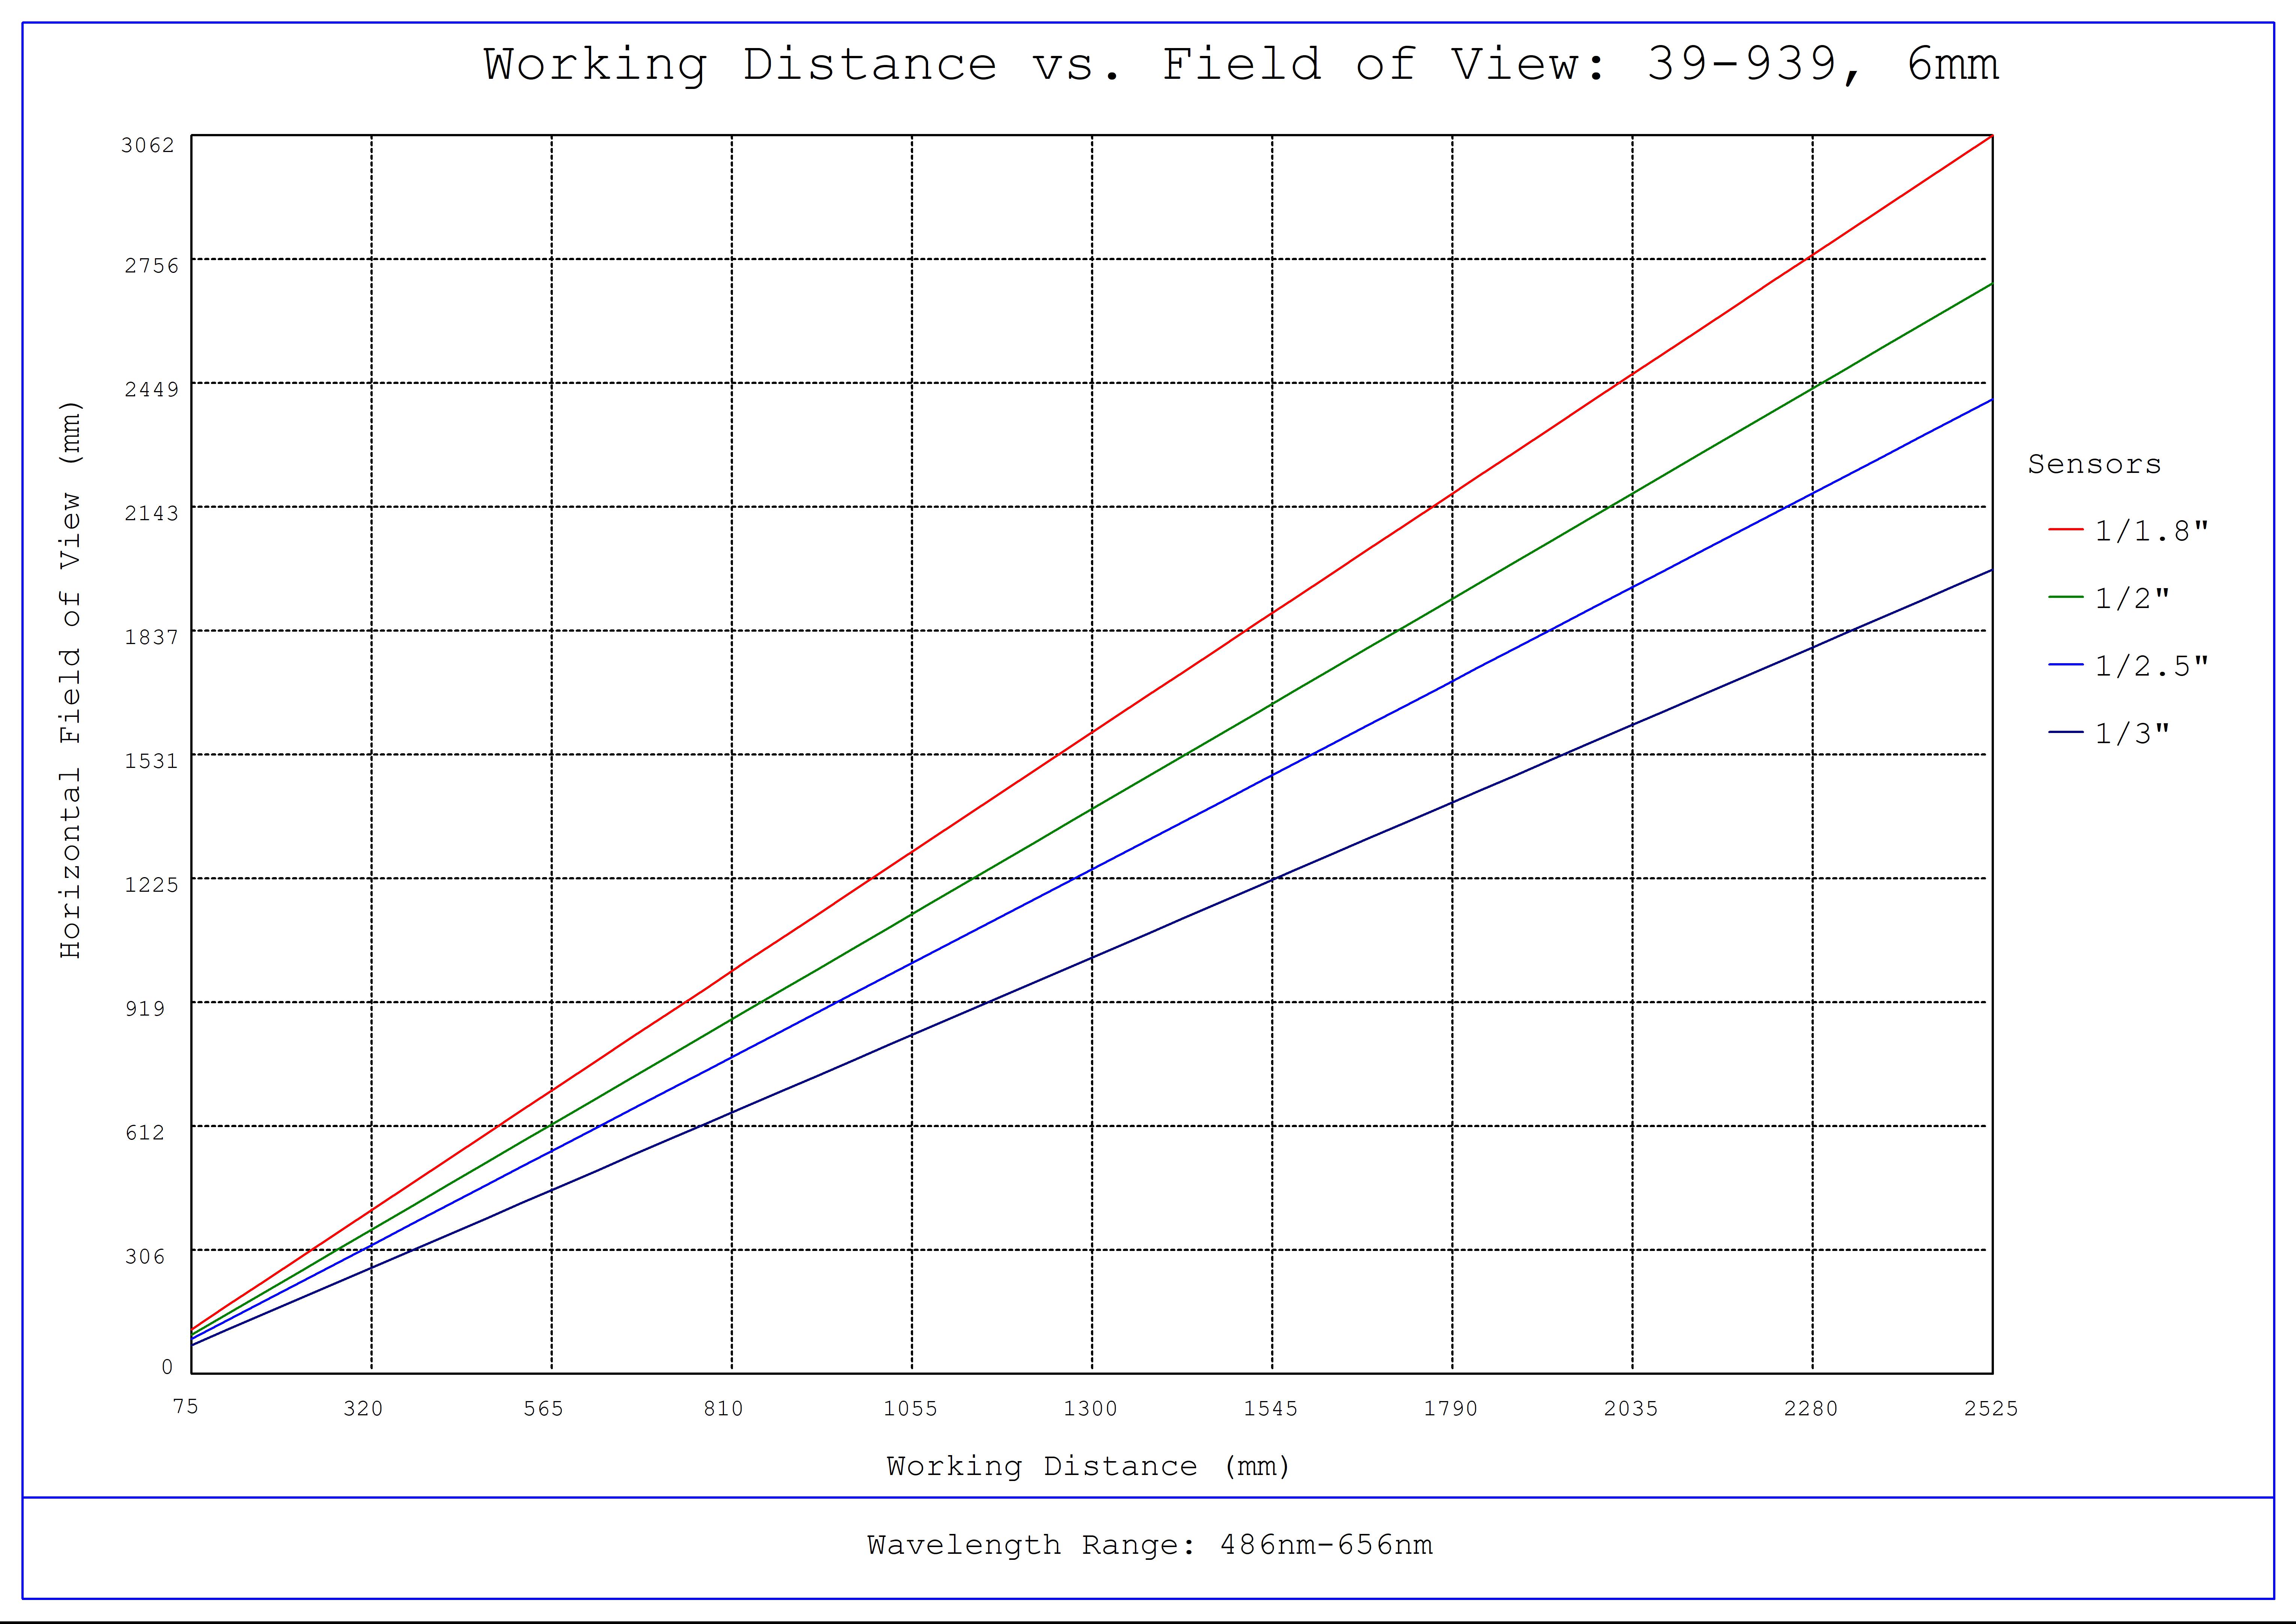 #39-939, 6mm C VIS-NIR Series Fixed Focal Length Lens, Working Distance versus Field of View Plot